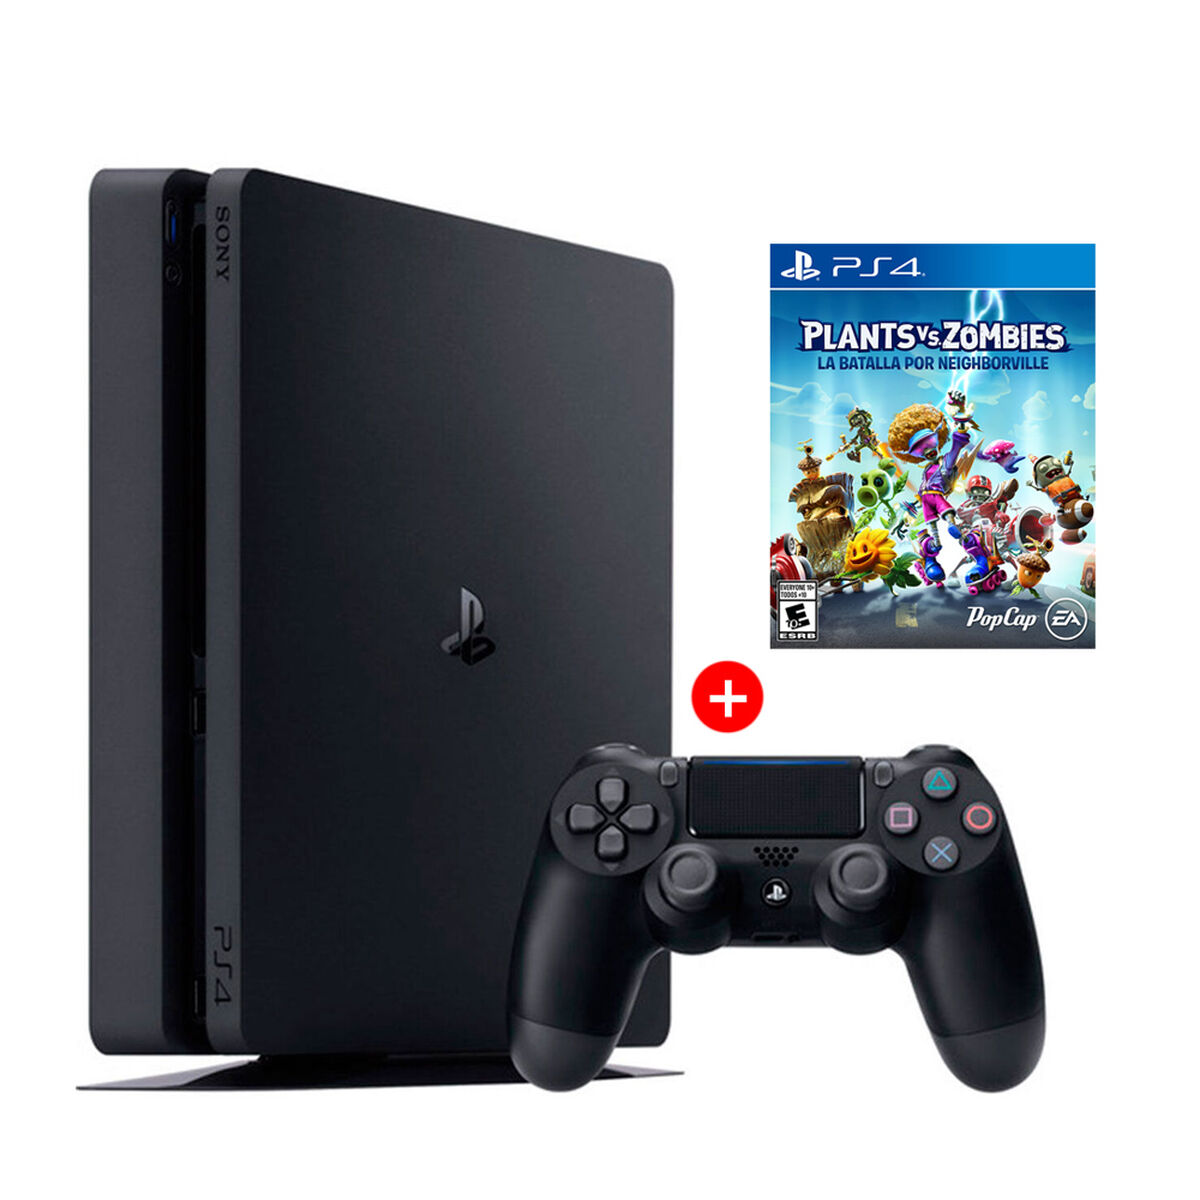 PS4 Sony 500GB Reacondicionada Americana + 1 Mando Inalámbrico DualShock + Juego PS4 Plants vs. Zombies: Battle for Neighborville